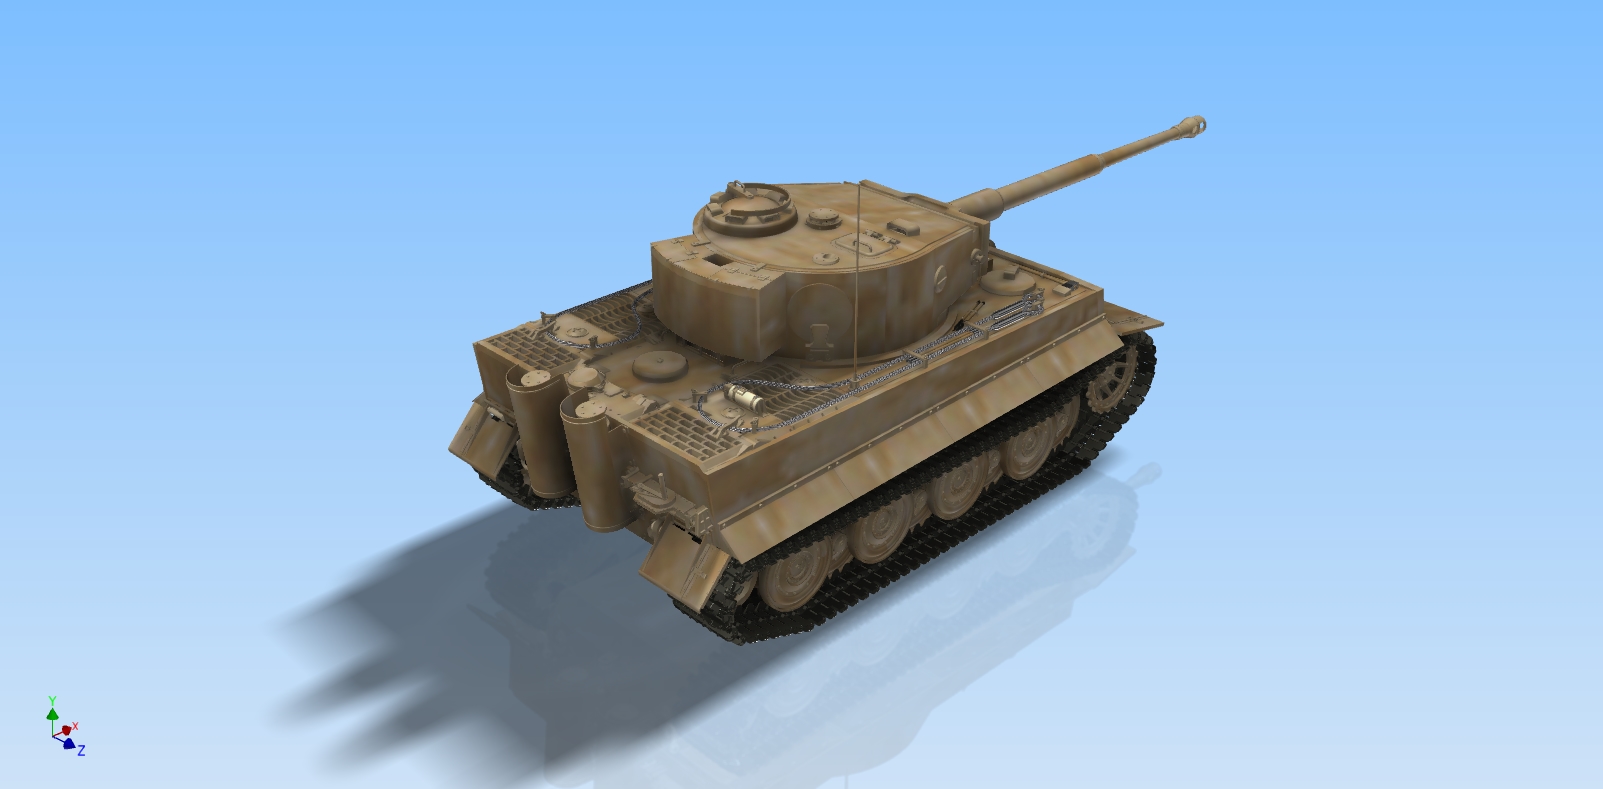 Tank Tiger 1 in STL format for 3D Printing